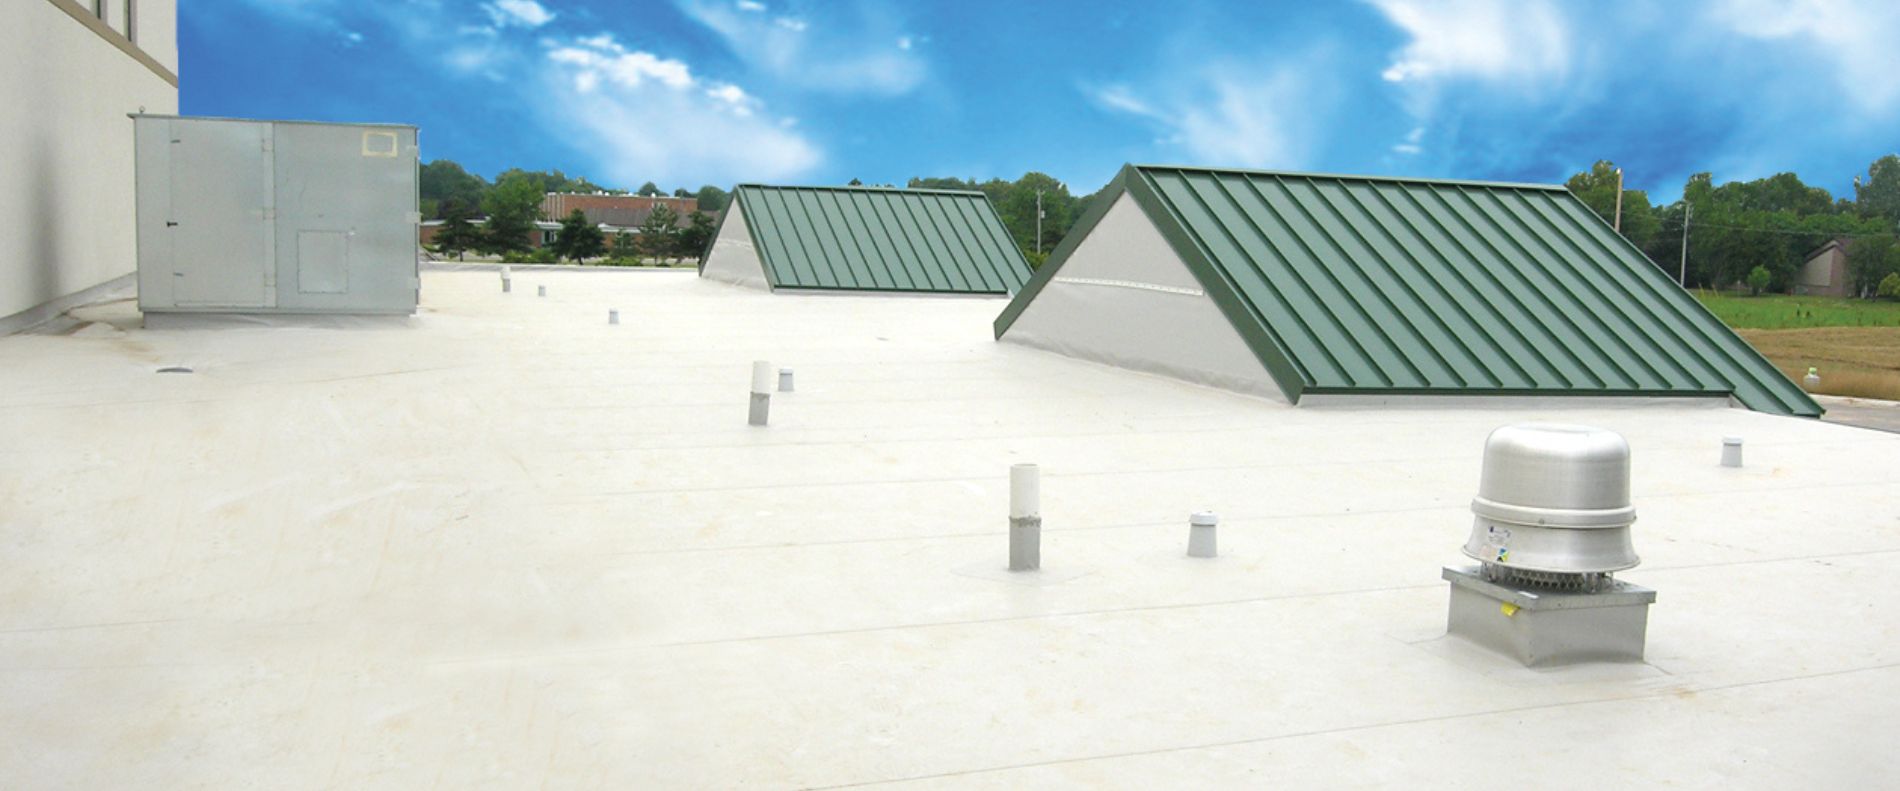 Duro-Last roof coatings repair flat roof